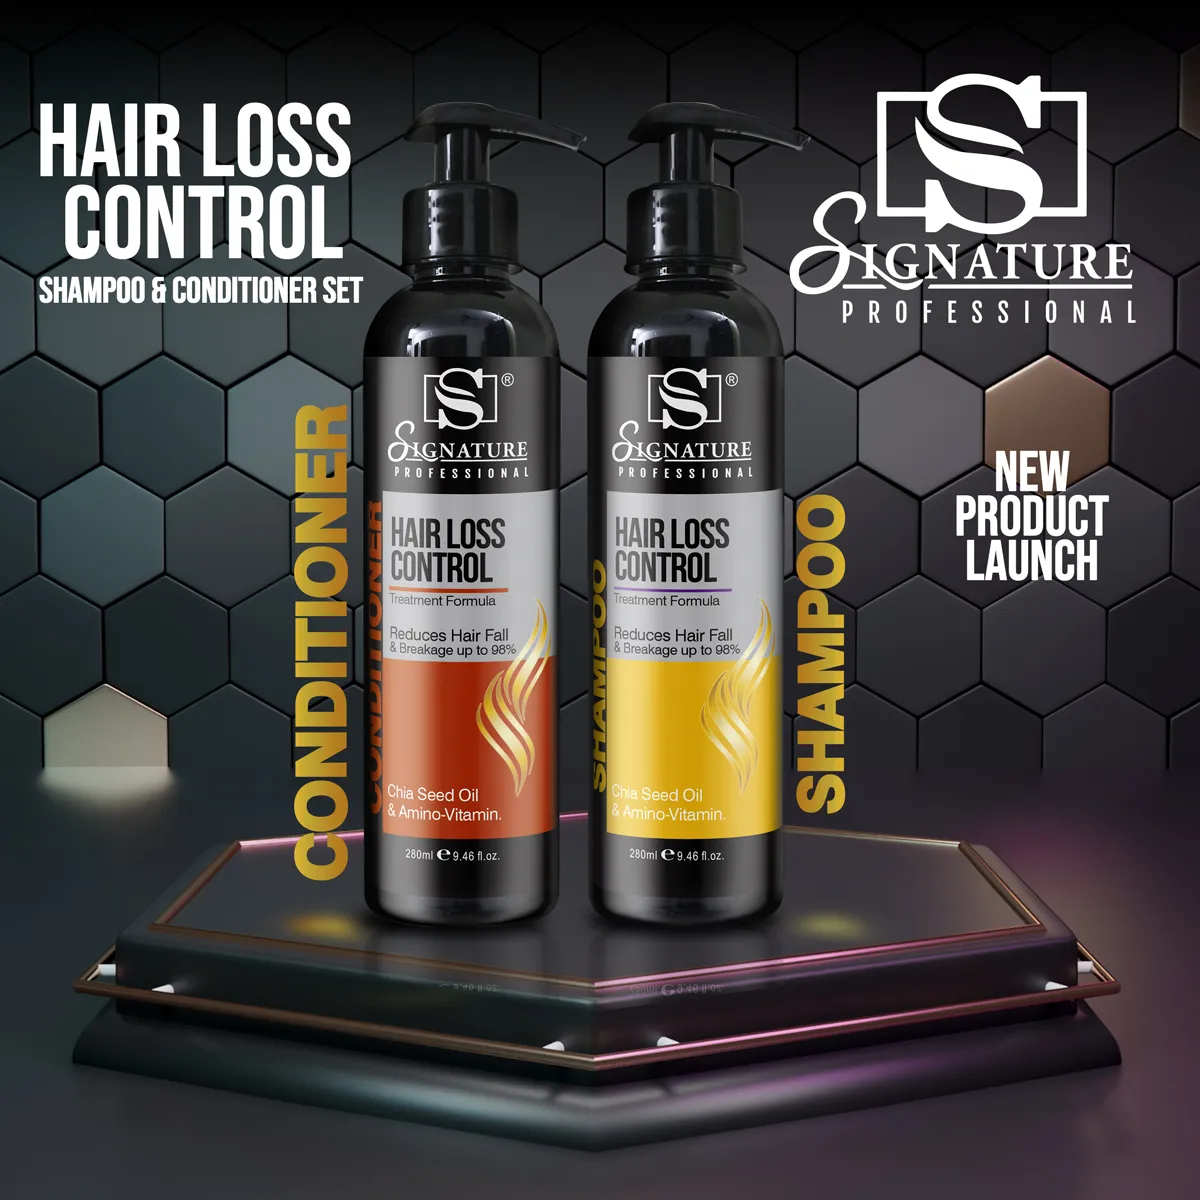 Signature Professional Hair Loss Control-Shampoo